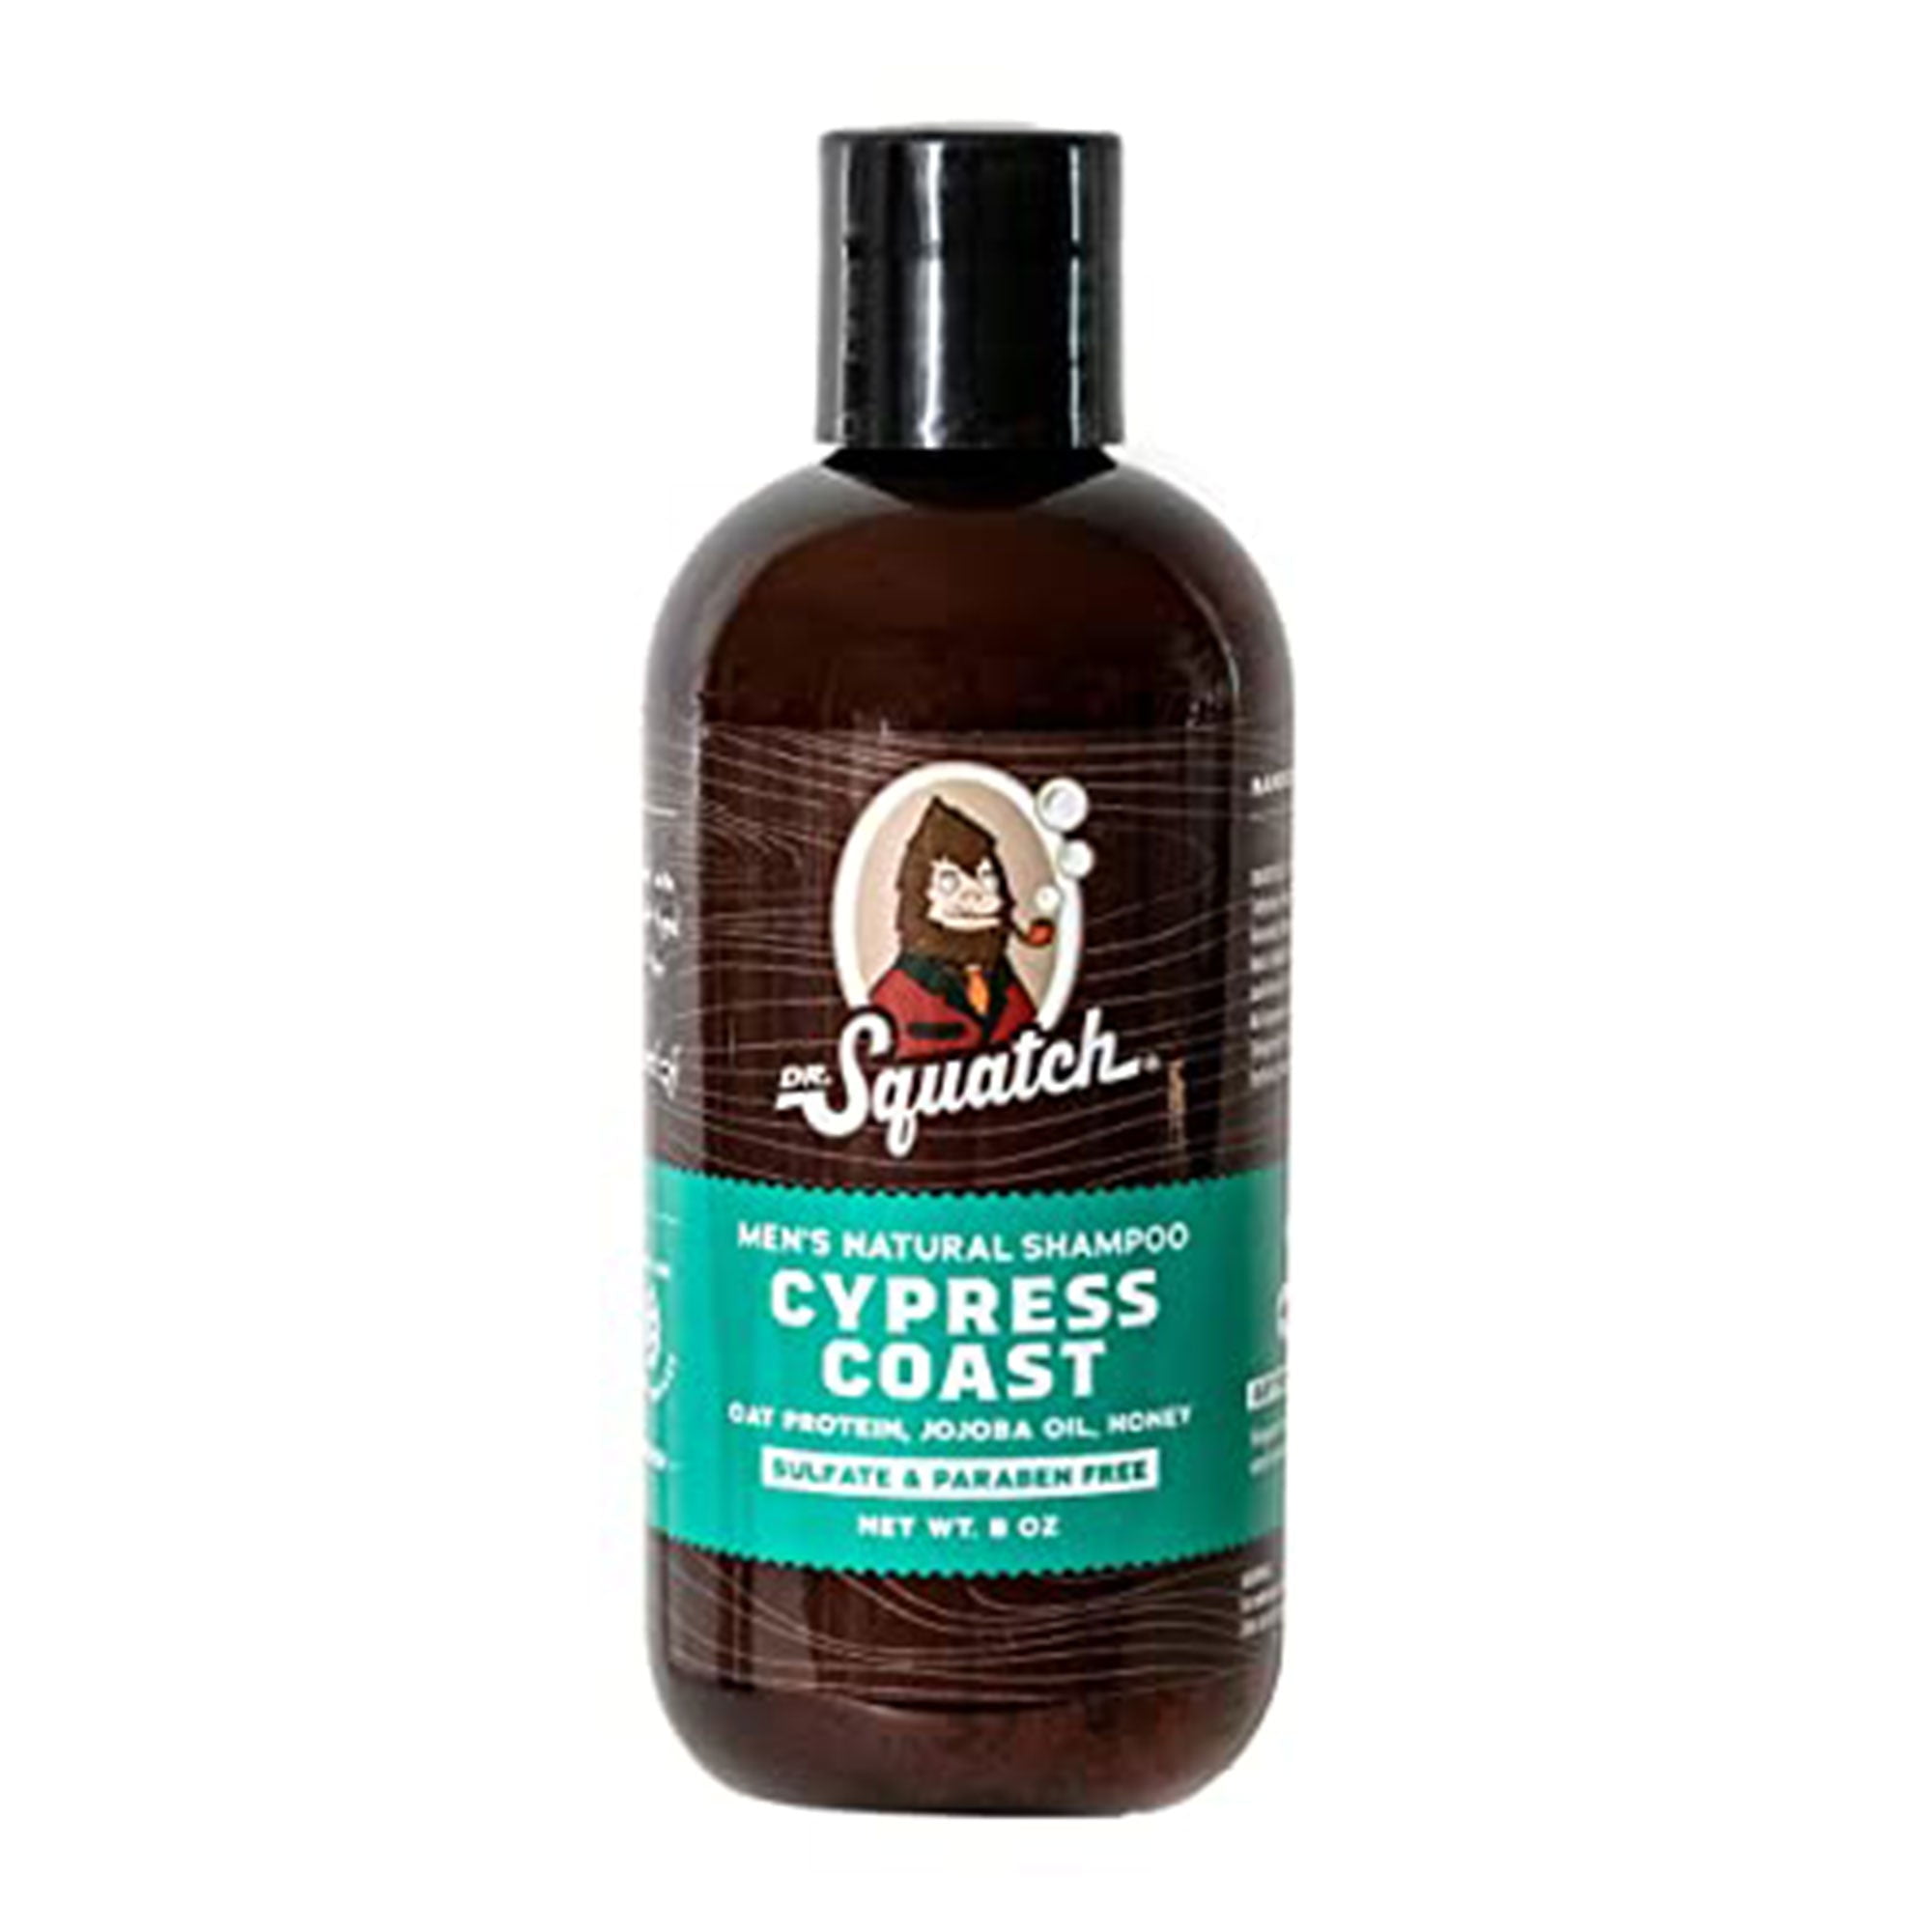 Dr. Squatch Men's Moisturizing Shampoo, Cypress Coast